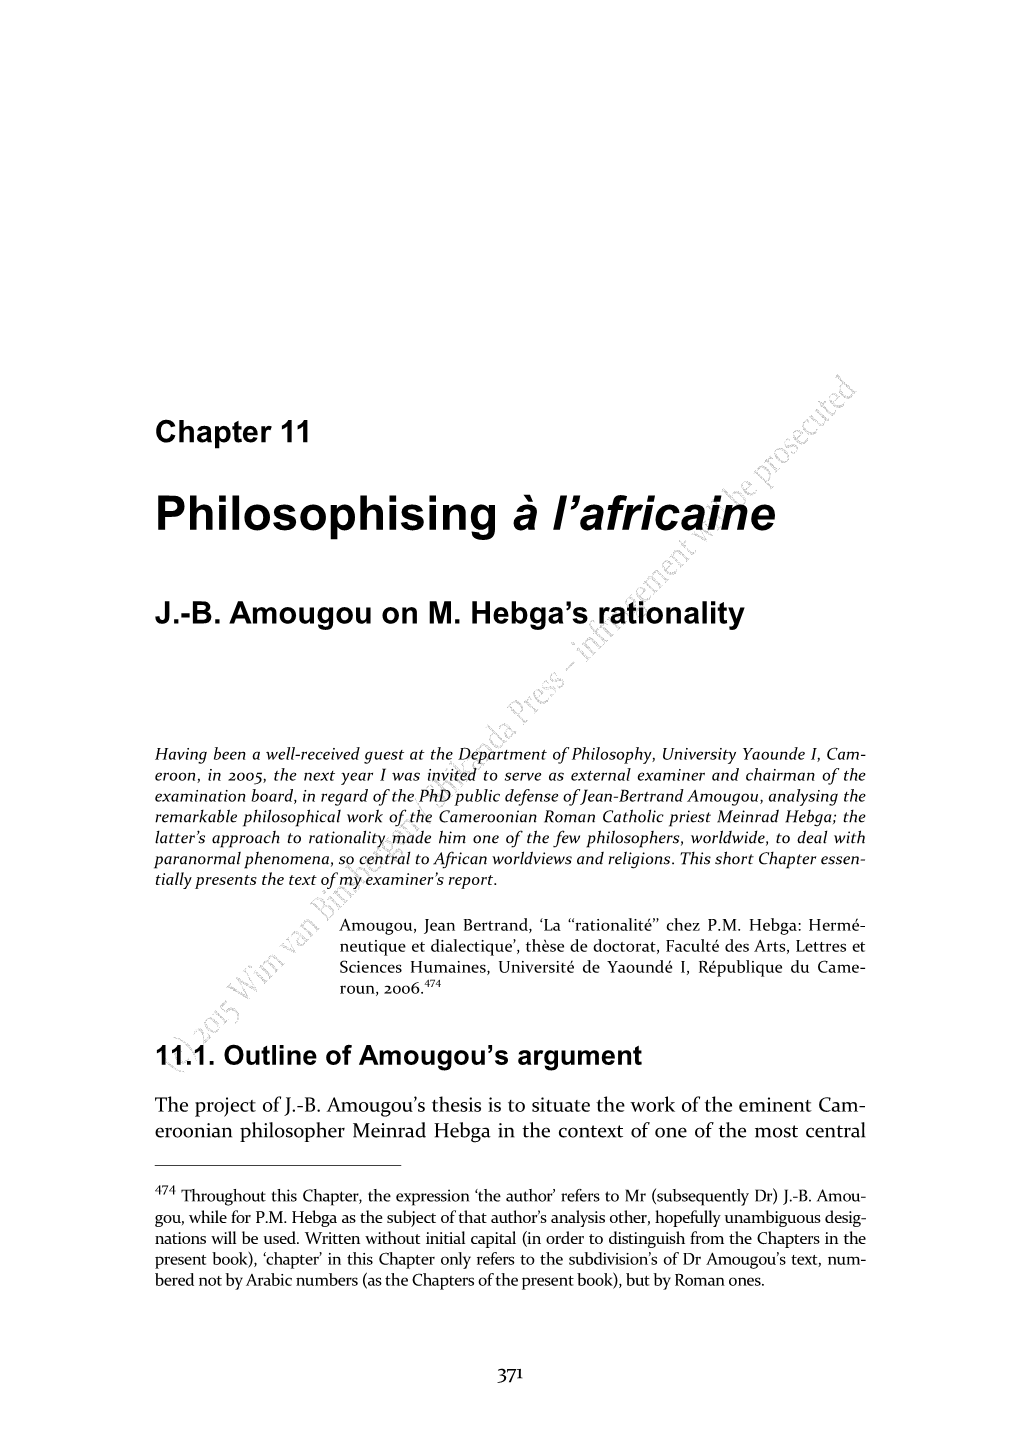 Chapter 11. Philosophising À L' Africaine